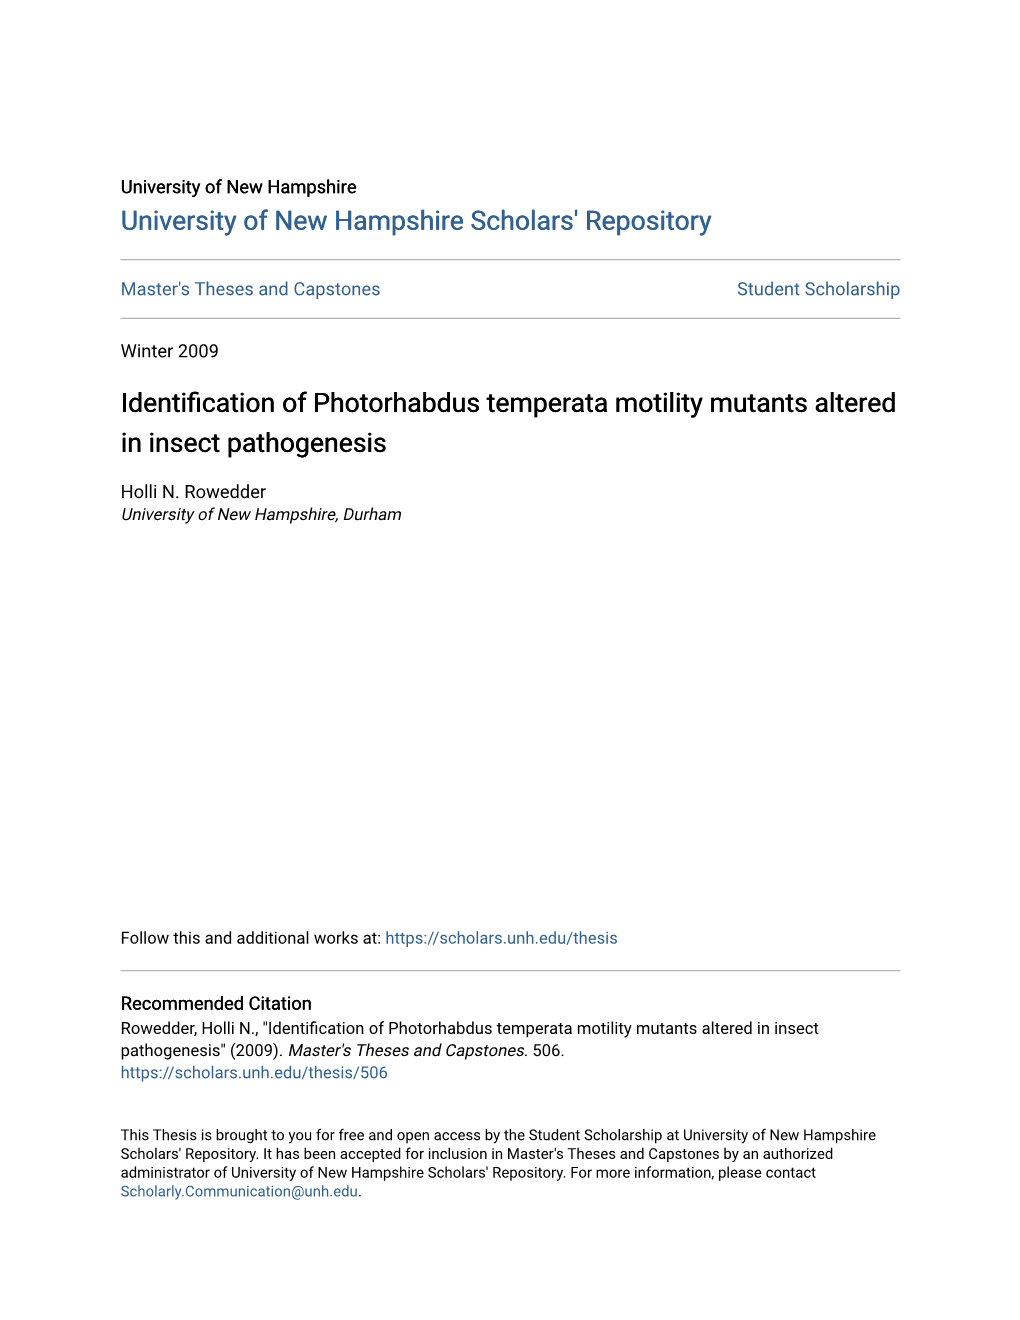 Identification of Photorhabdus Temperata Motility Mutants Altered in Insect Pathogenesis